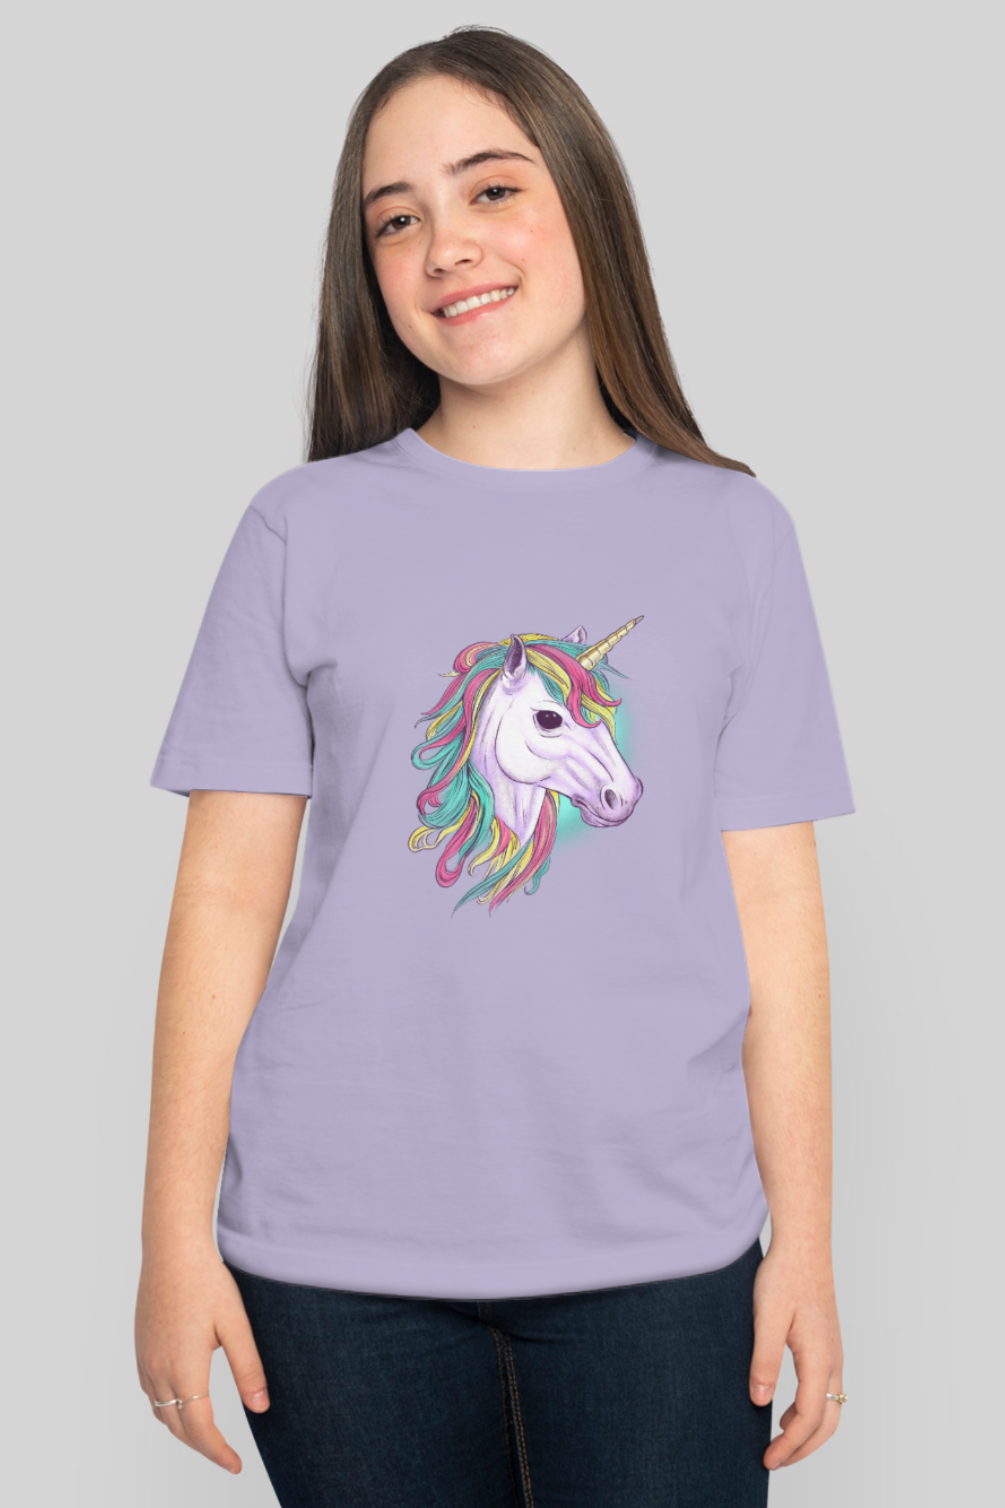 Colorful Unicorn Printed T-Shirt For Women - WowWaves - 10